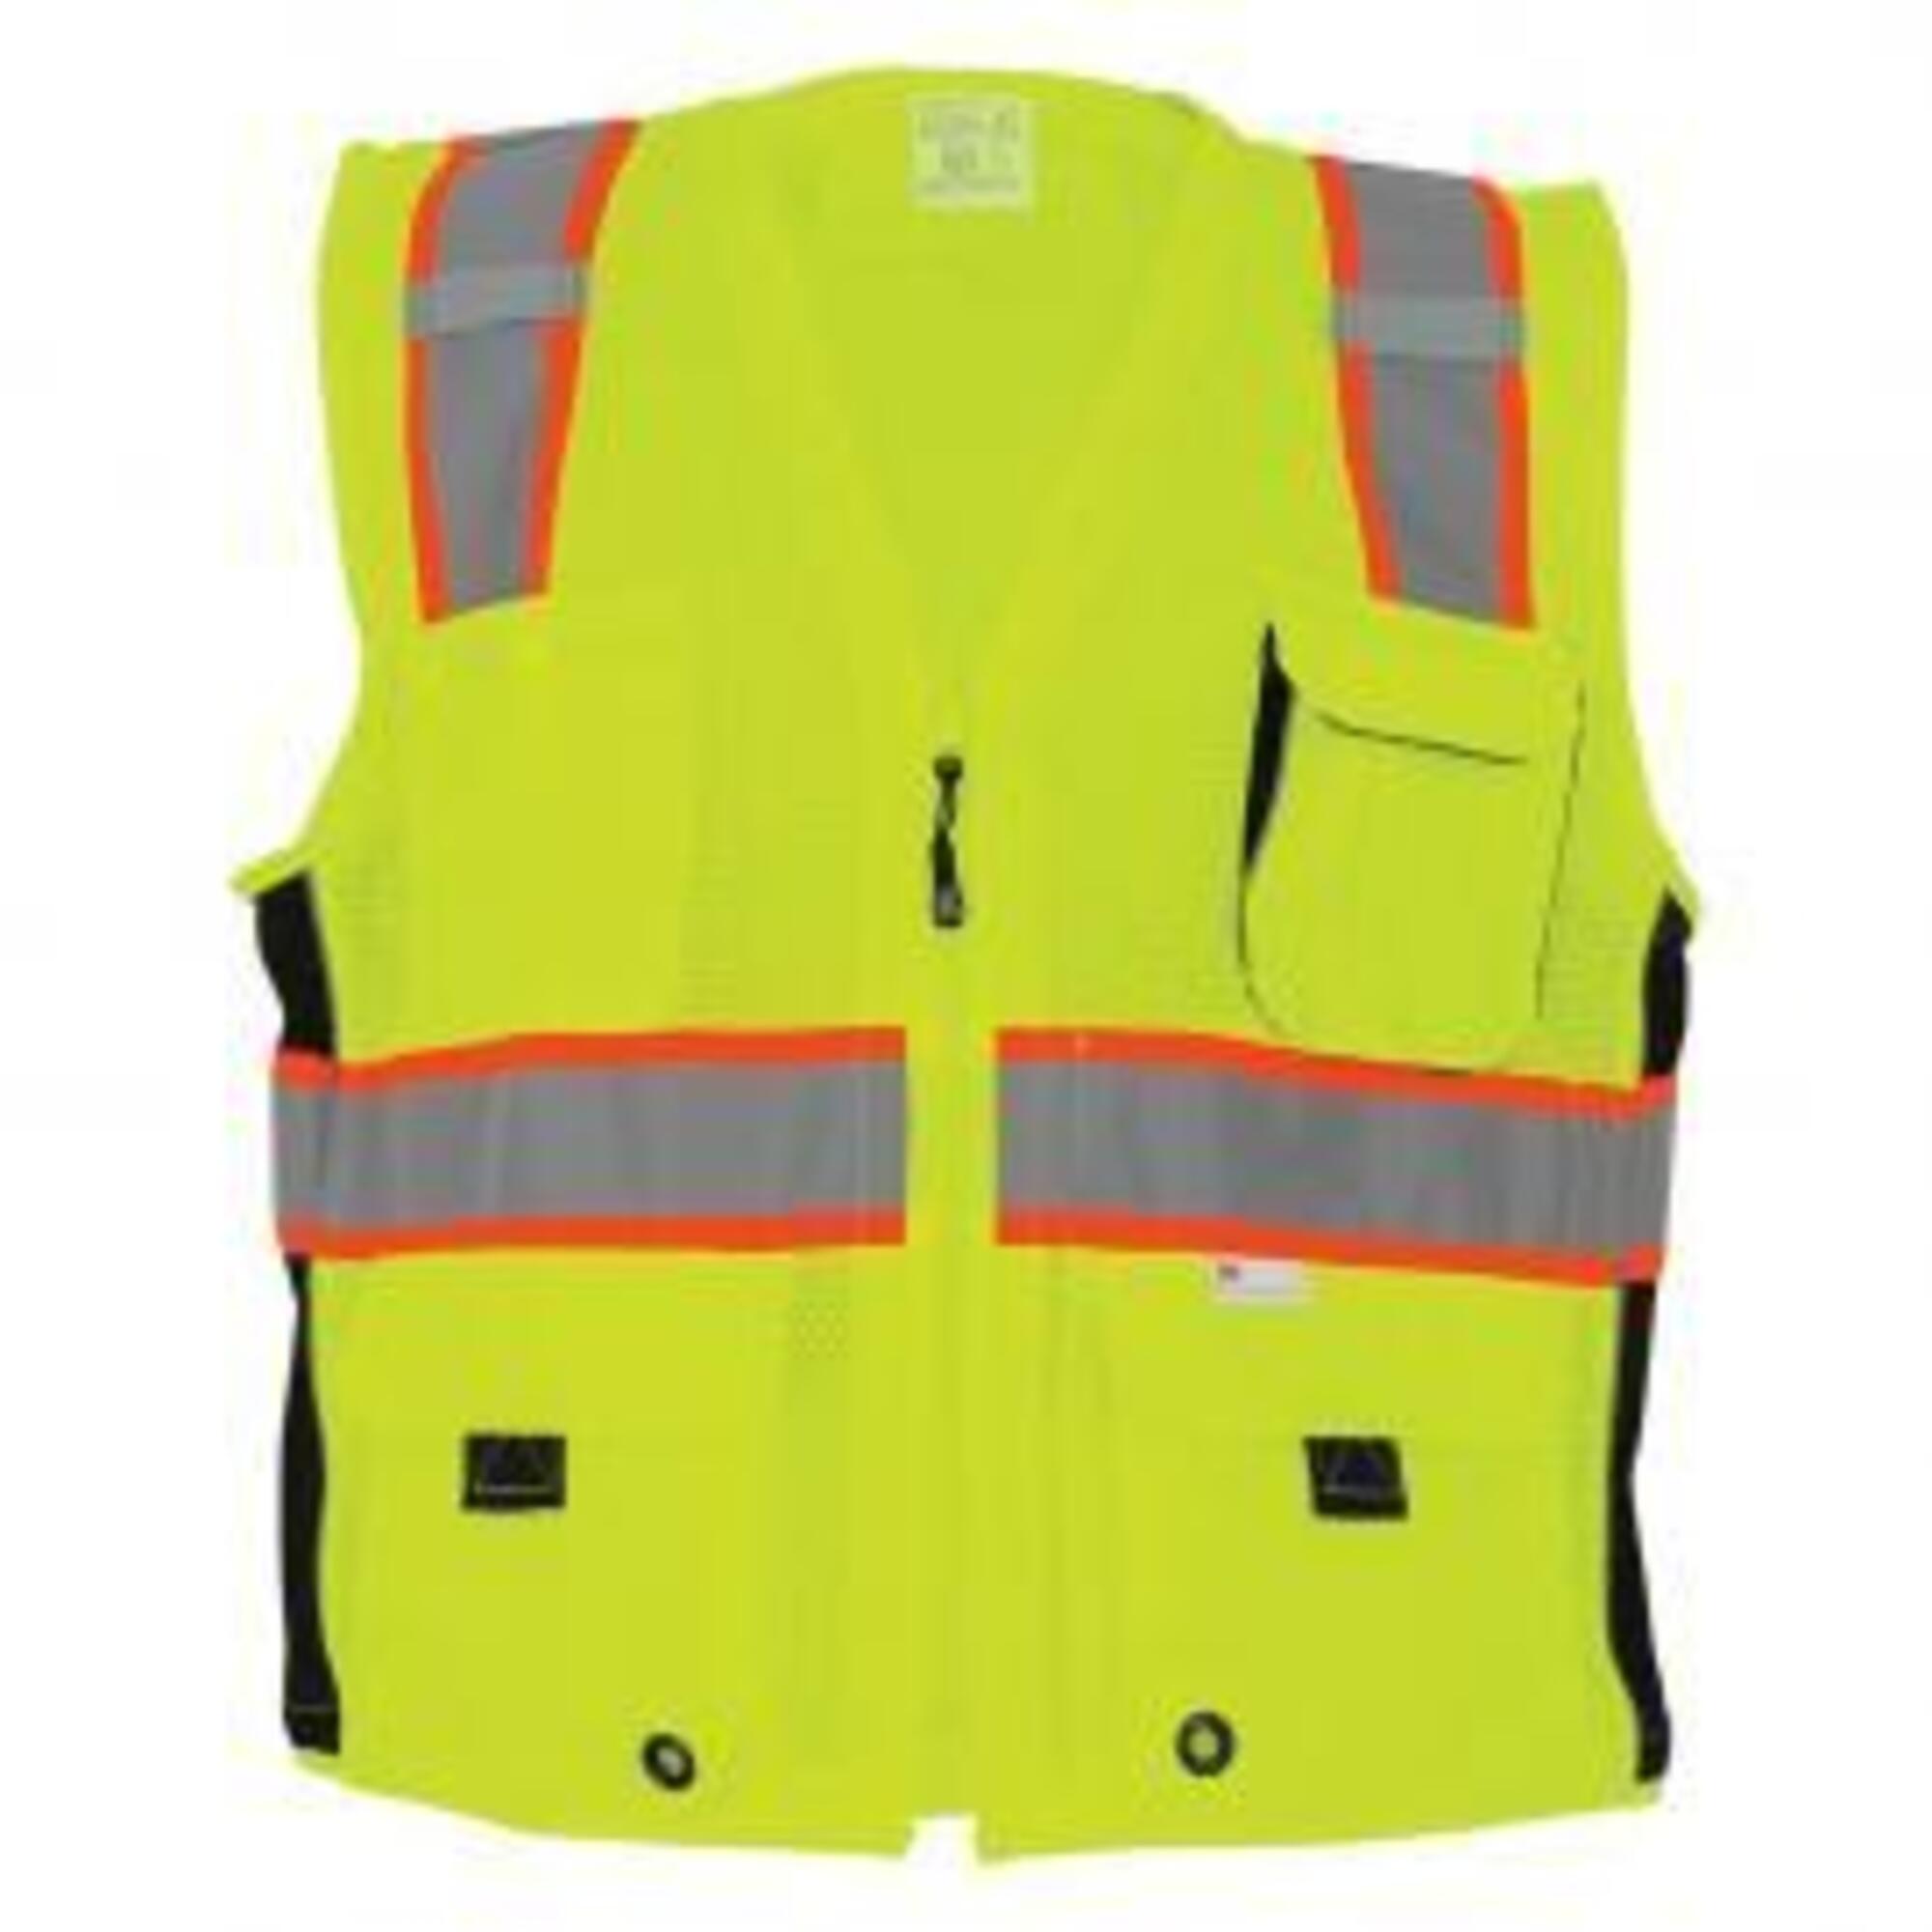 FrogWear Surveyors Safety Vest, XS, Yellow/Green, Model GLO-O79-XS